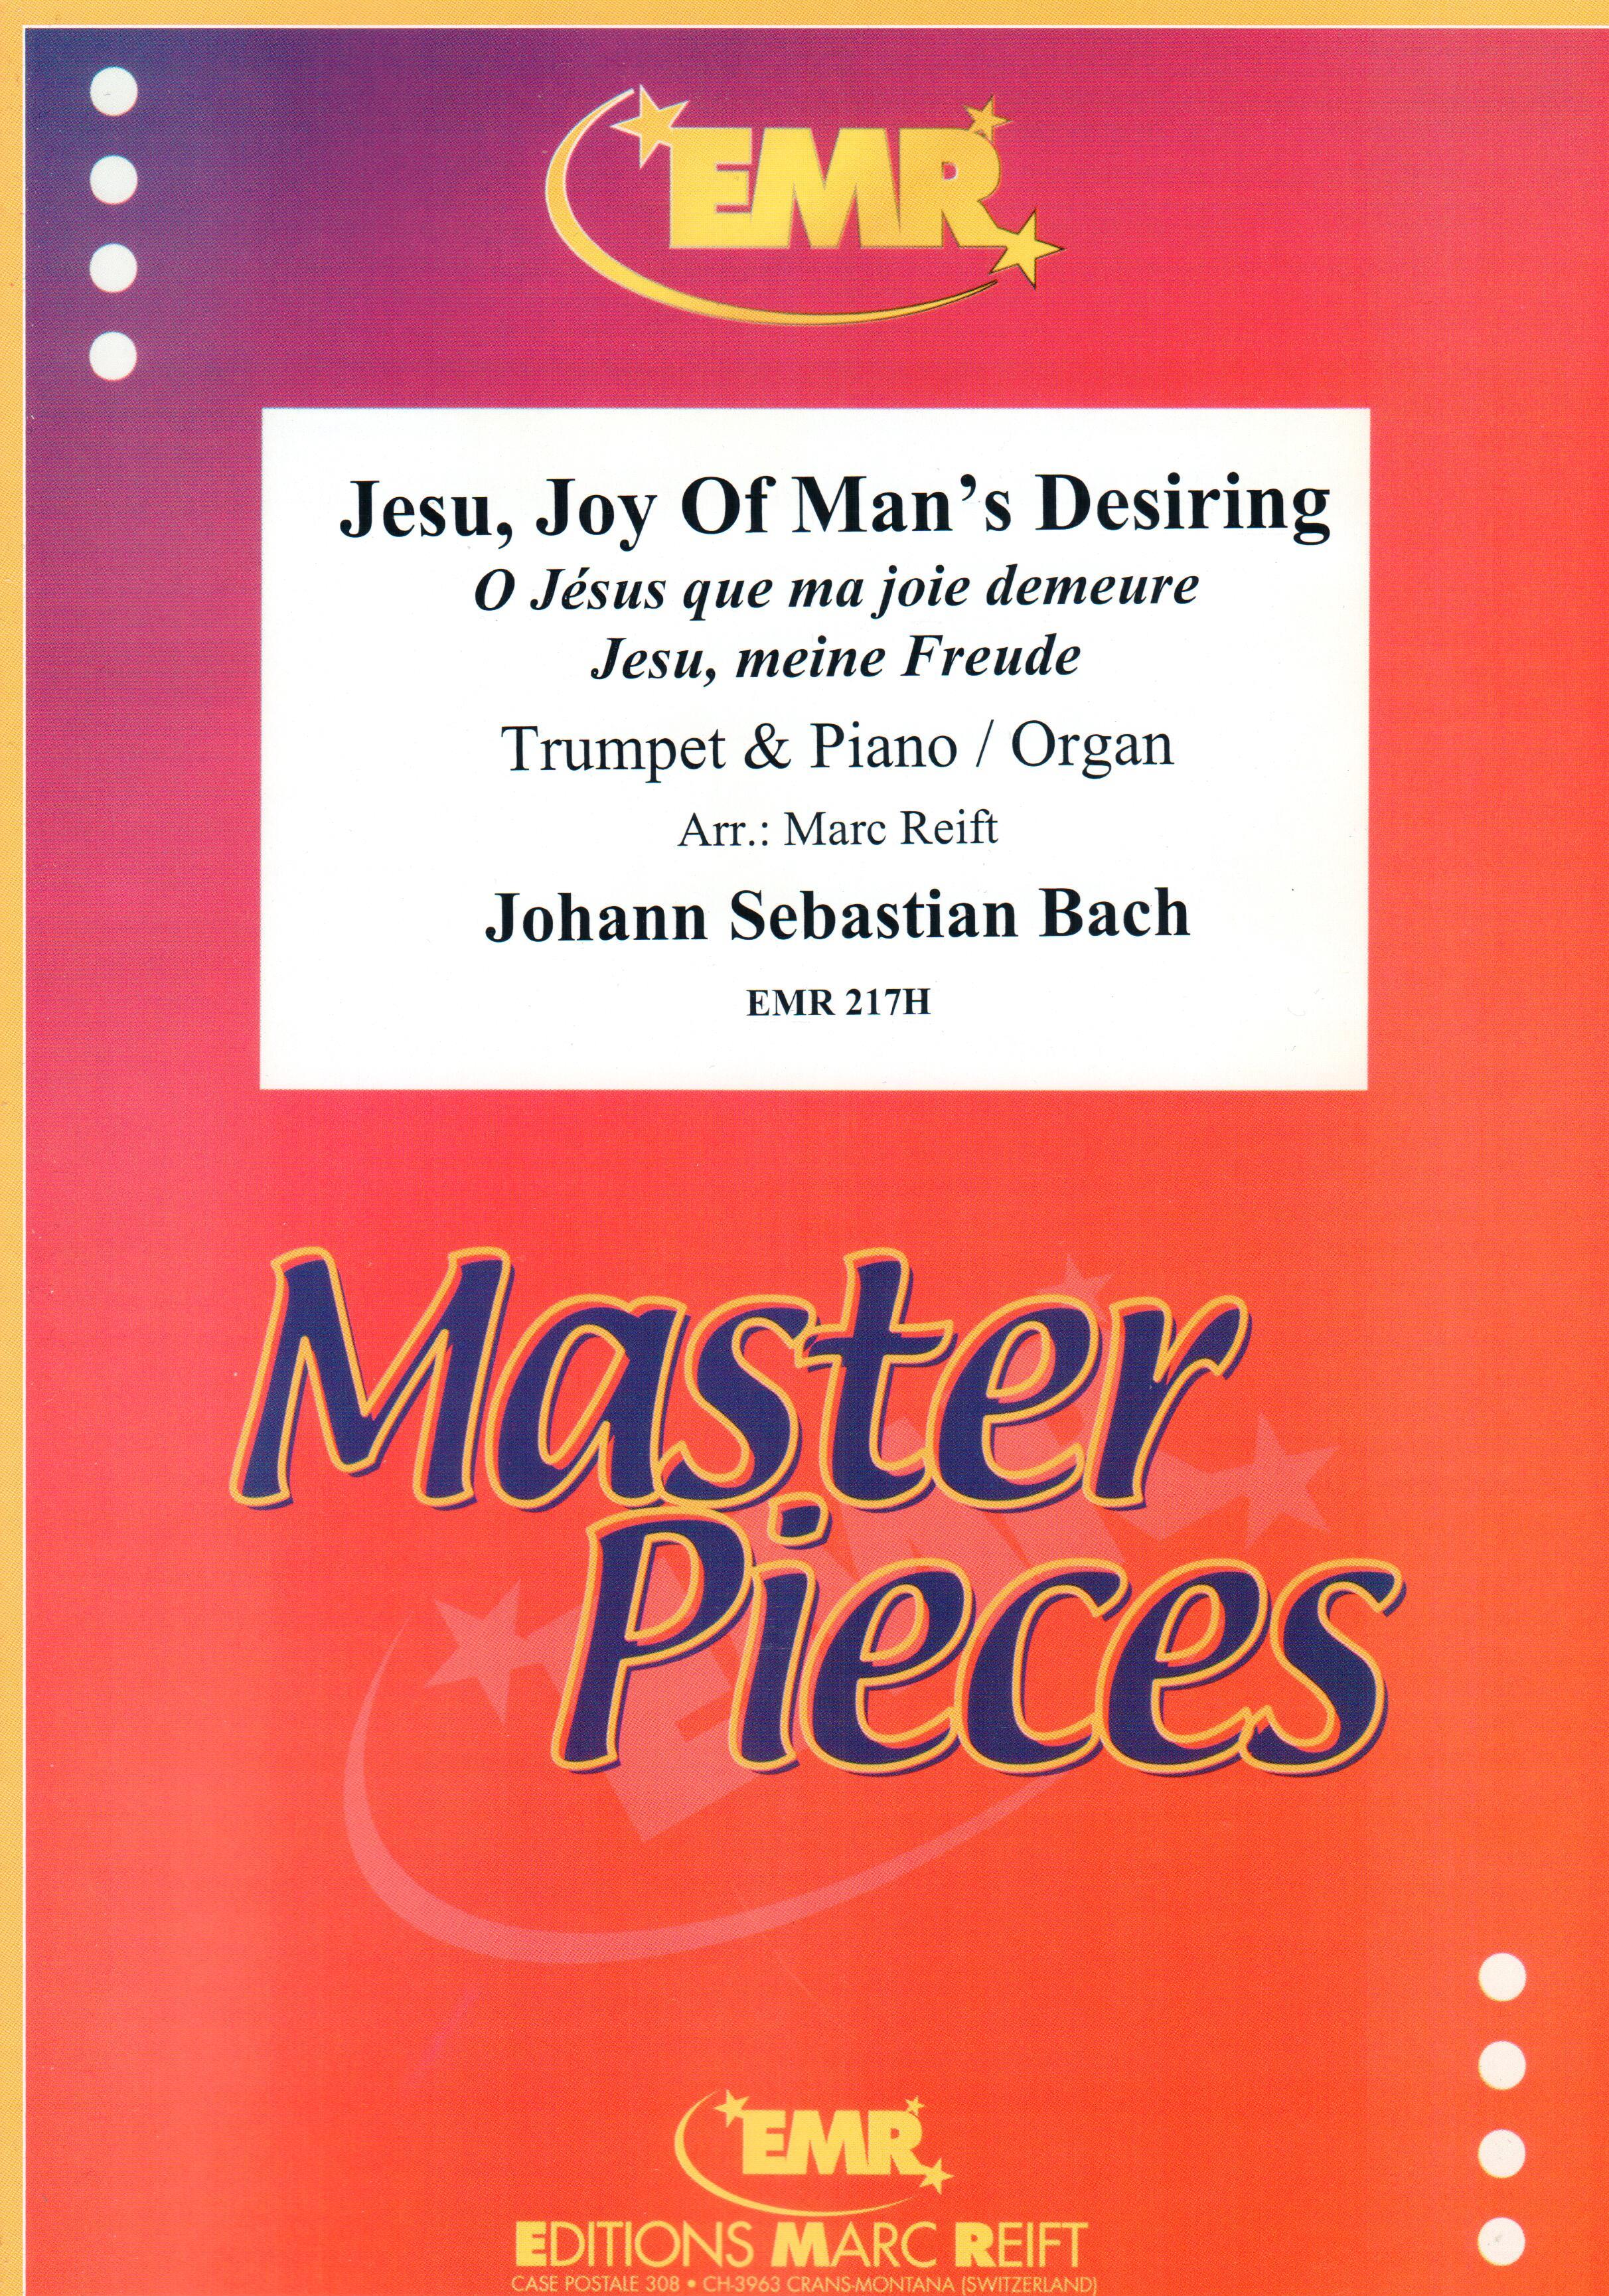 Jesu Joy Of Man S Desiring Just Music Brass Band Music And Cds